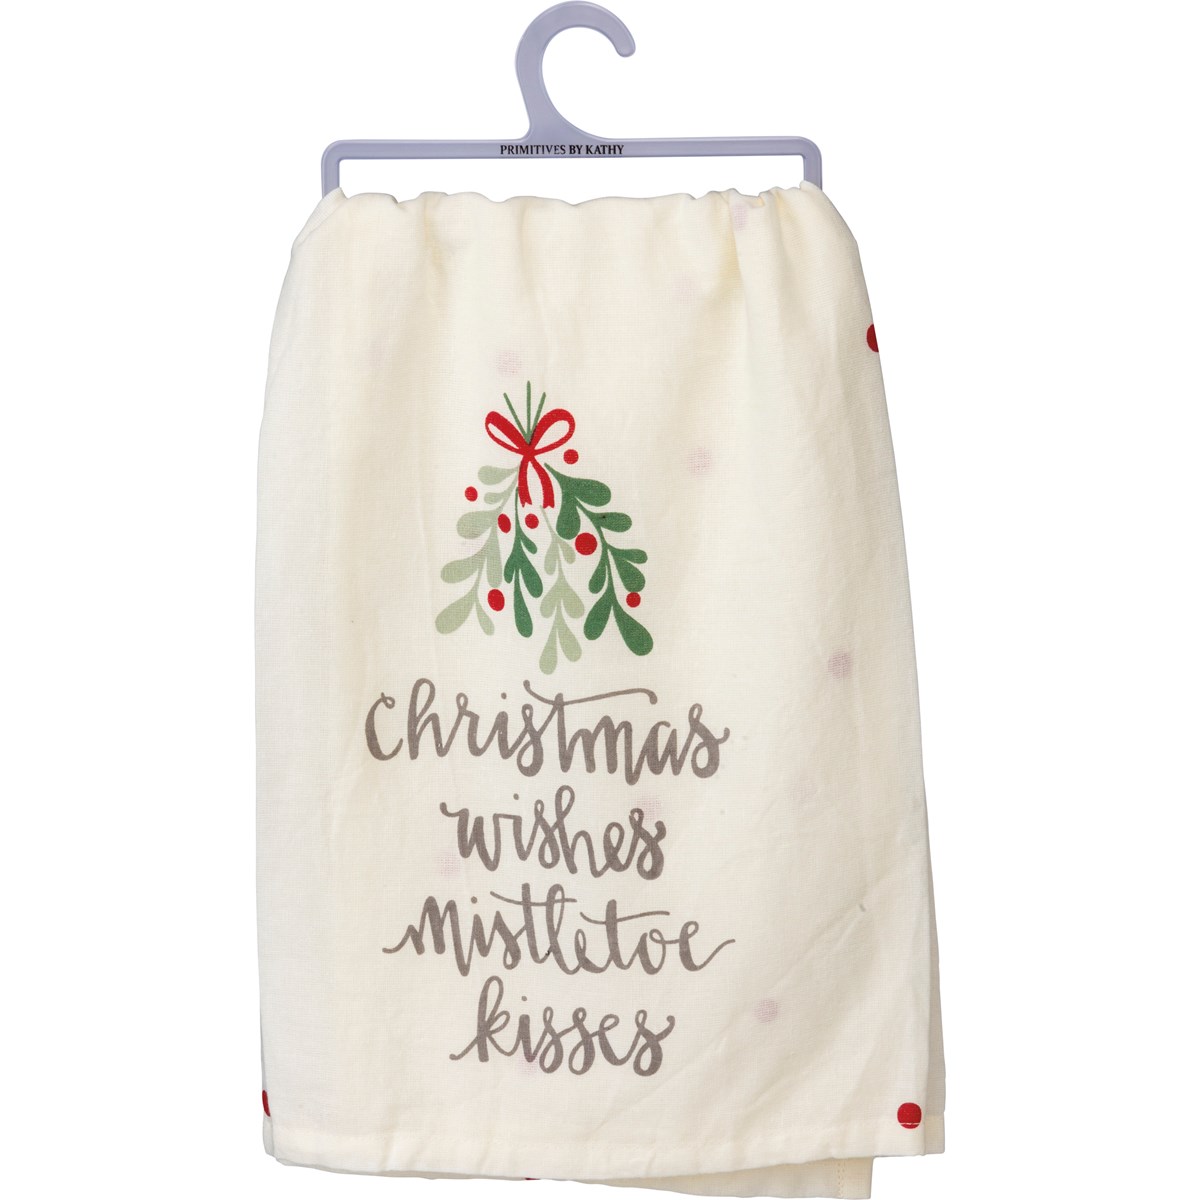 Christmas Wishes Mistletoe Kisses Kitchen Towel - Cotton